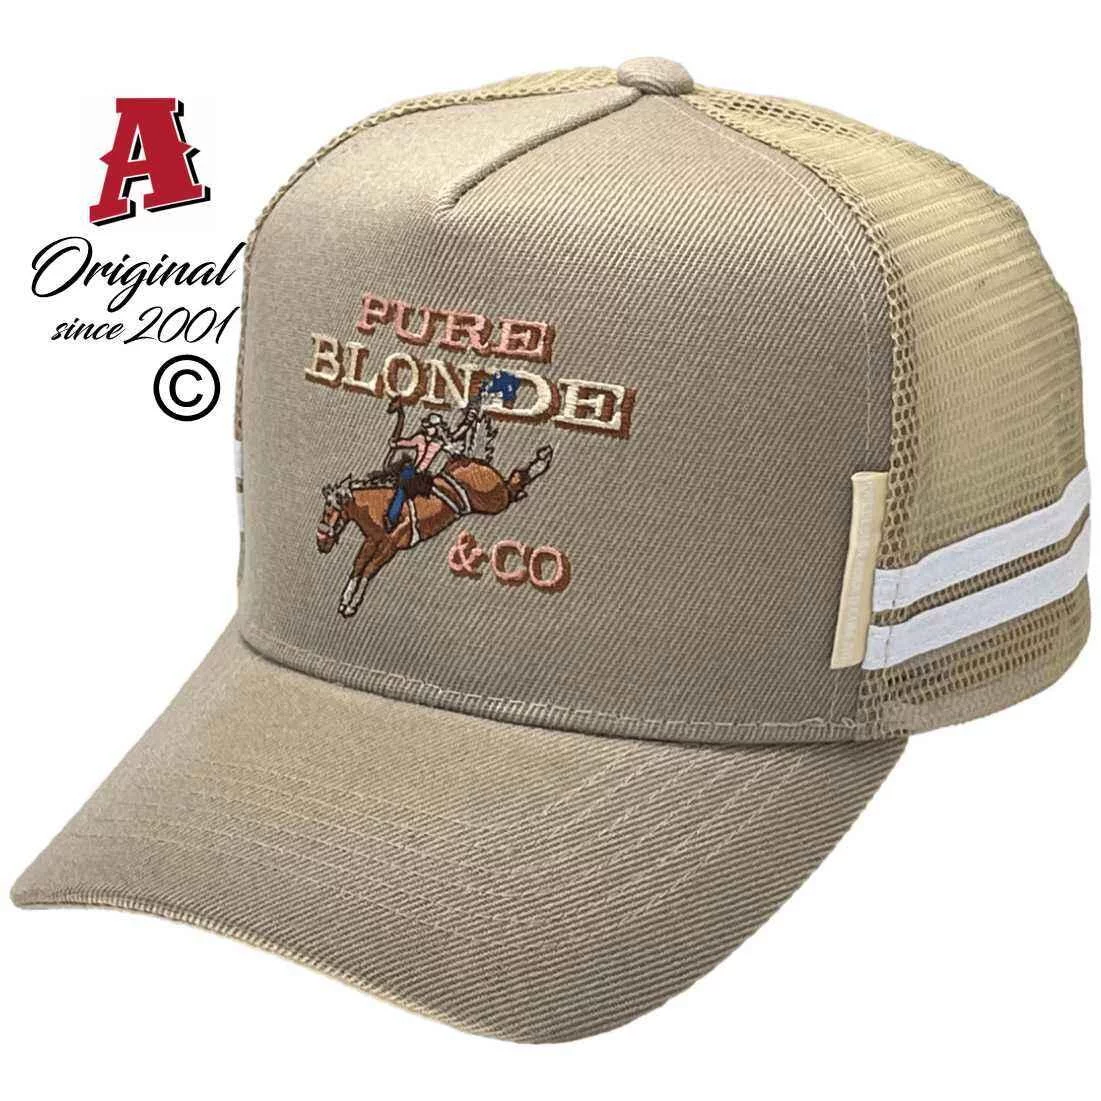 Pure Blond & Co Dubbo NSW HP Basic Aussie Trucker Hats with 2 SideBands & Australian HeadFit Crown Khaki